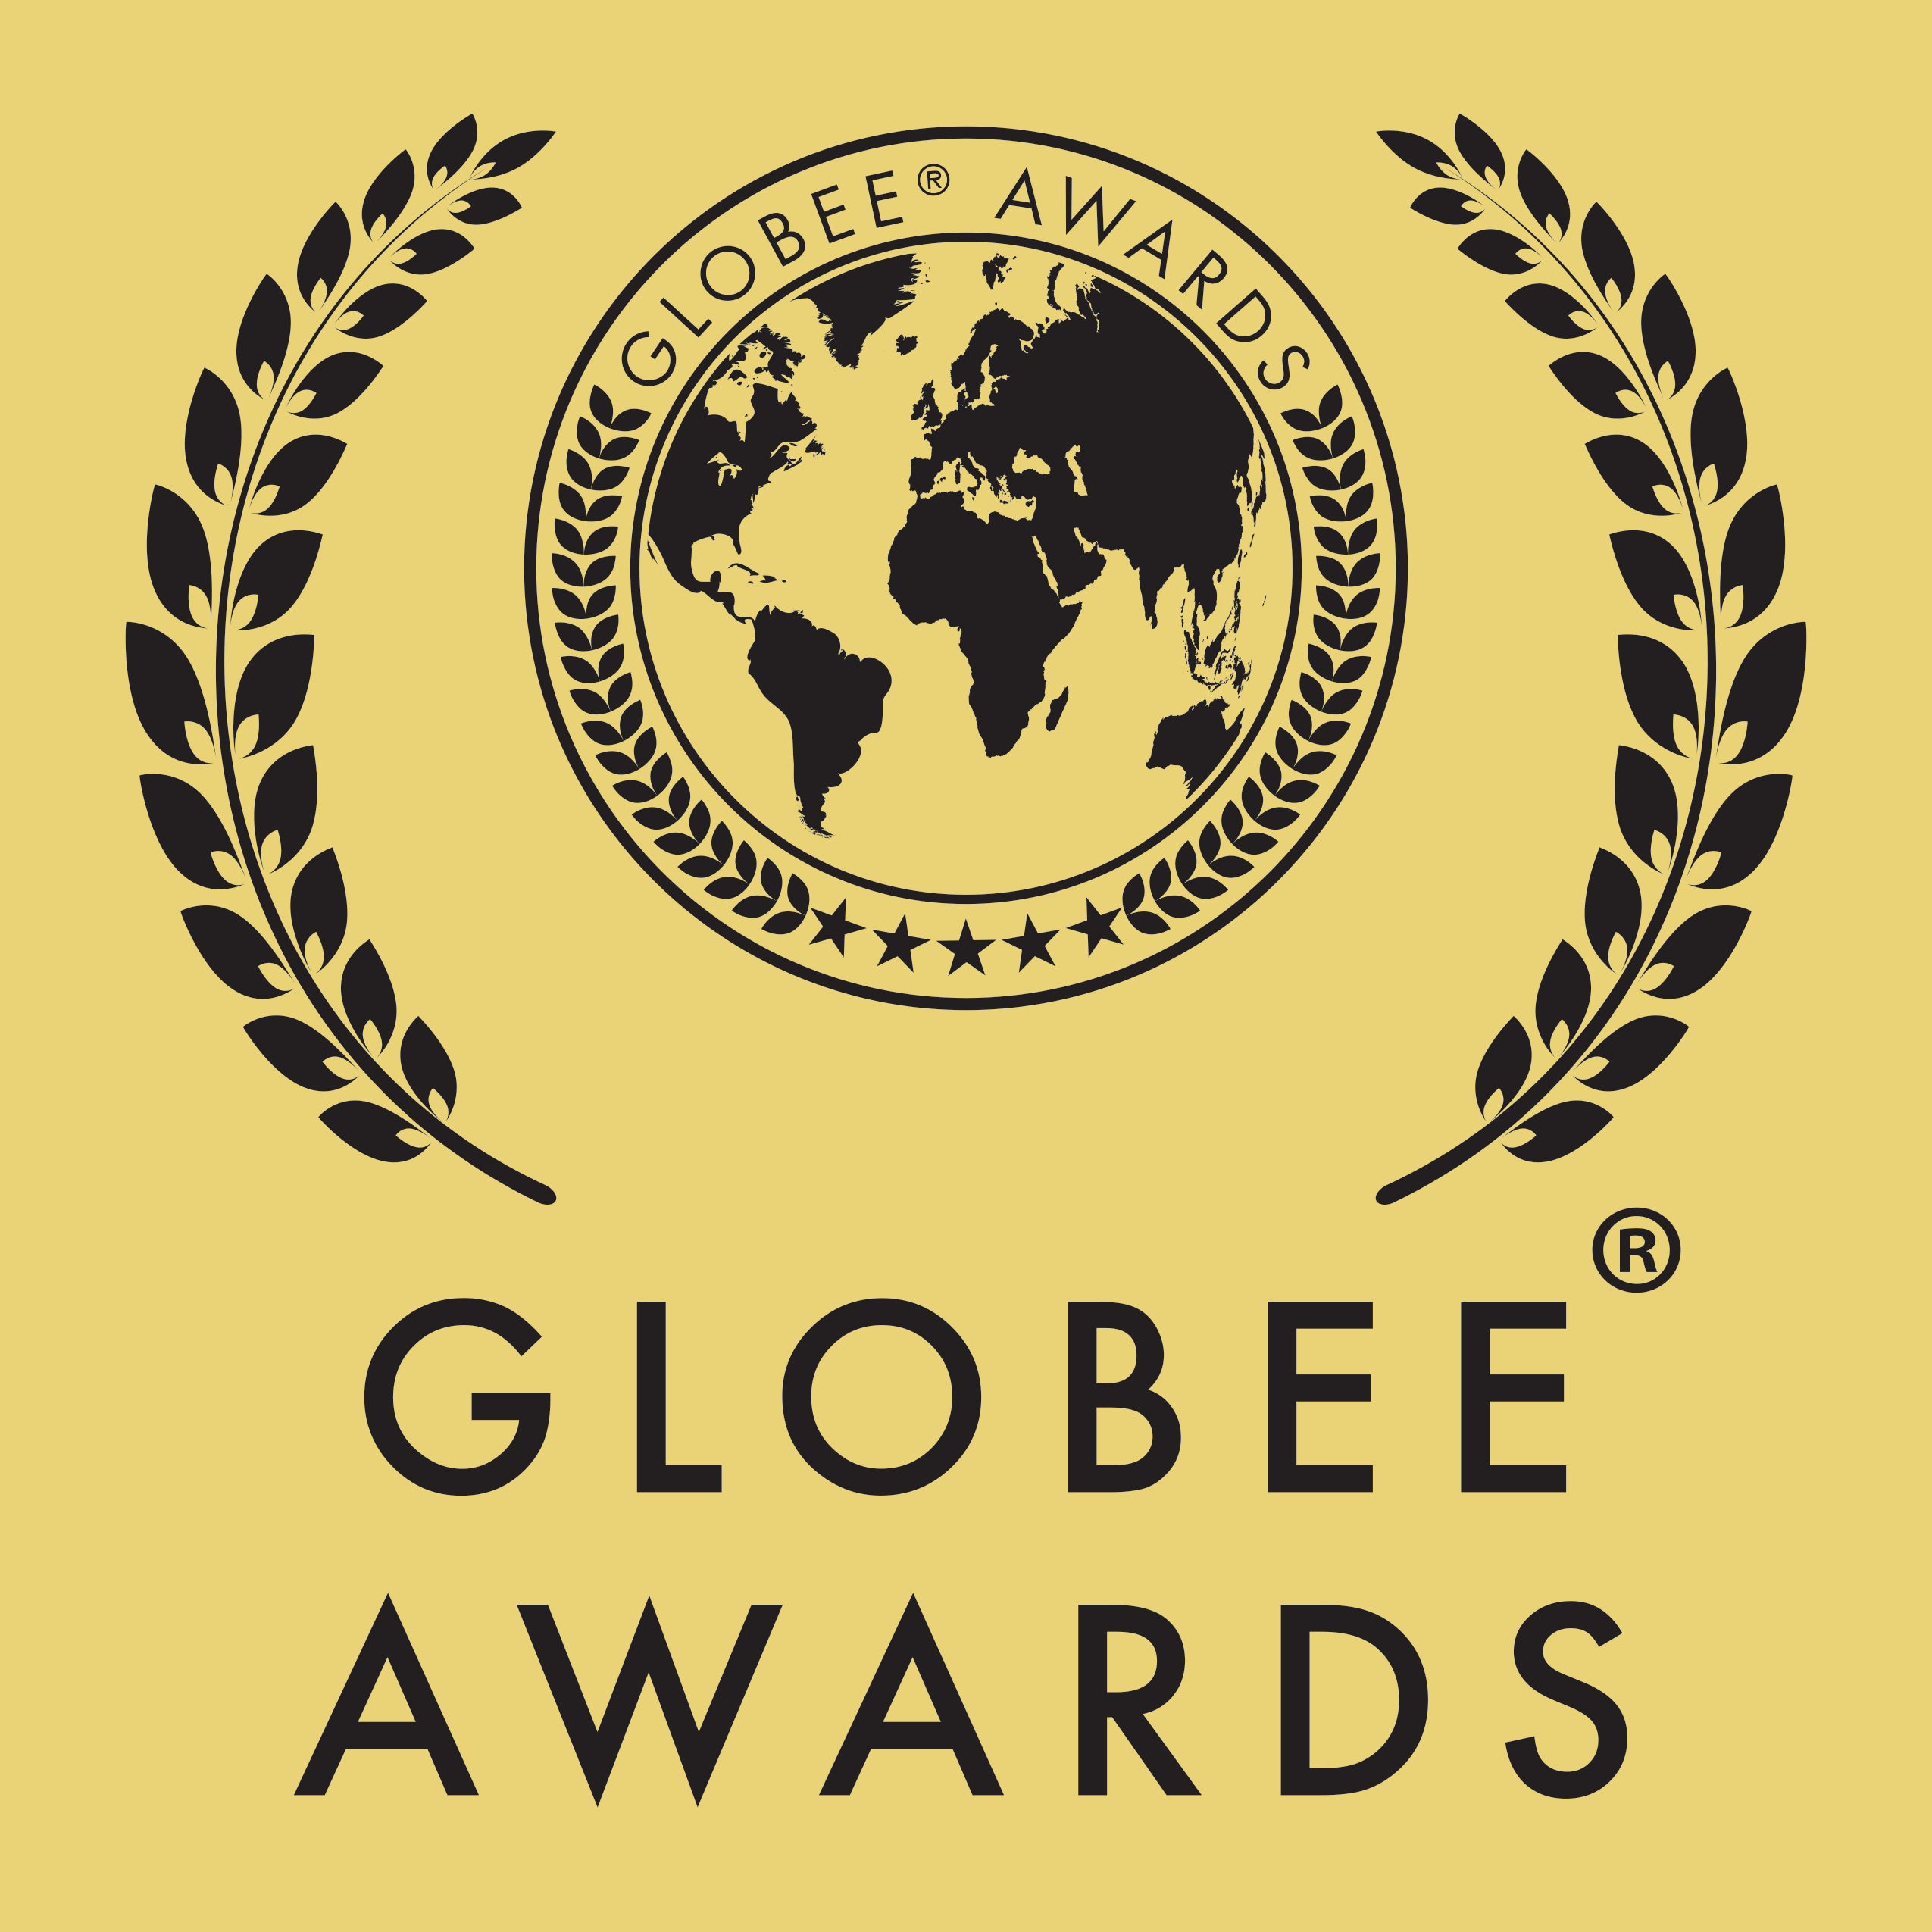 Globee-Awards-logo-PNG